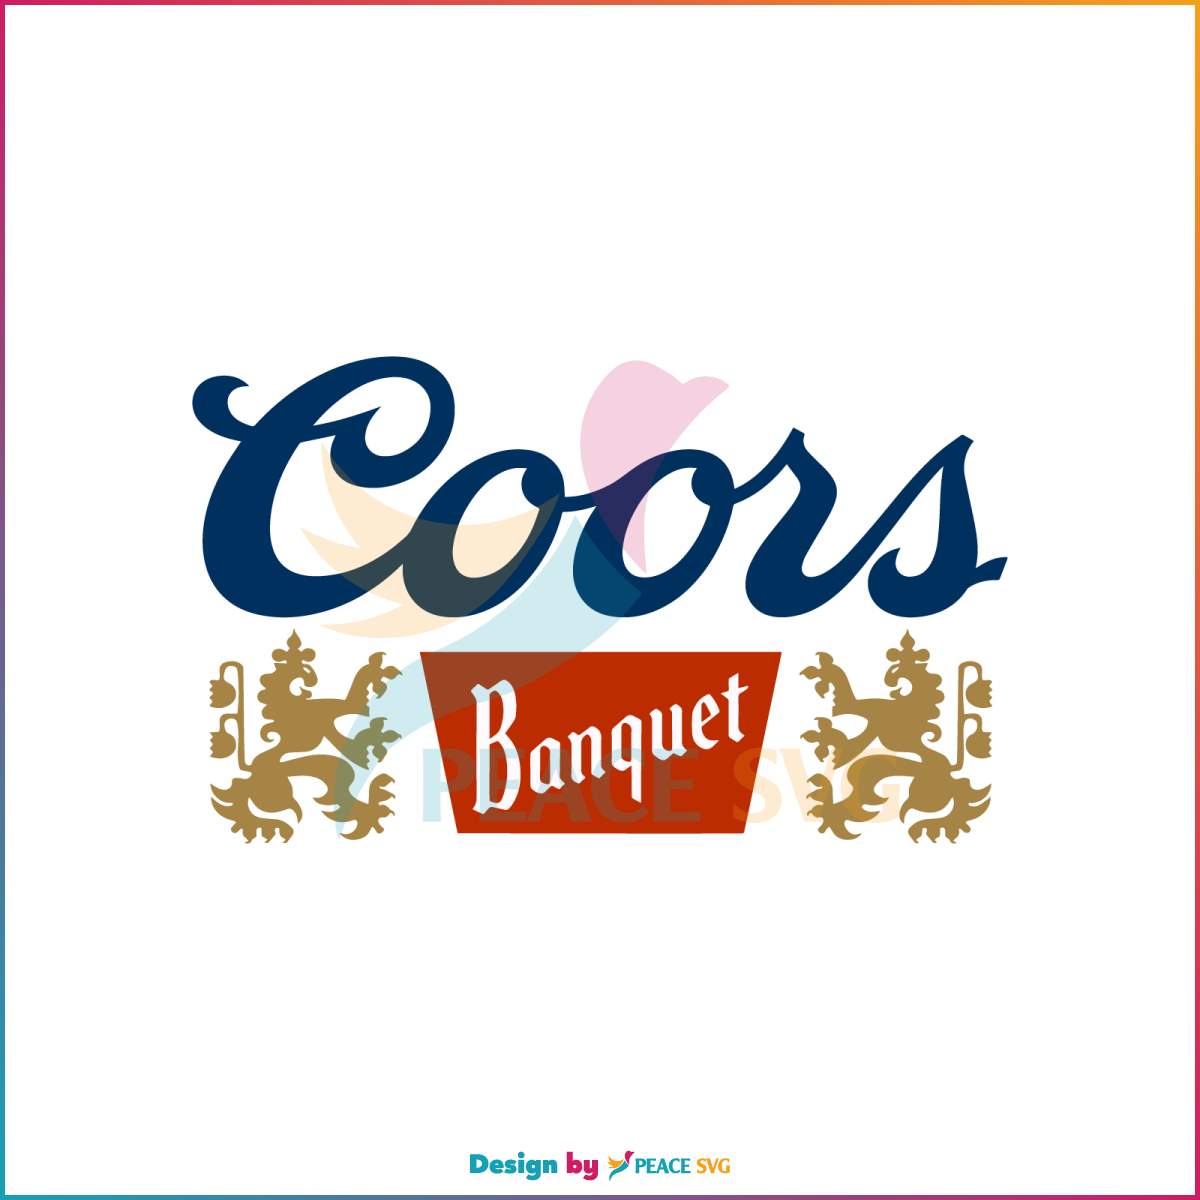 retro-coors-banquet-beer-logo-svg-graphic-design-file